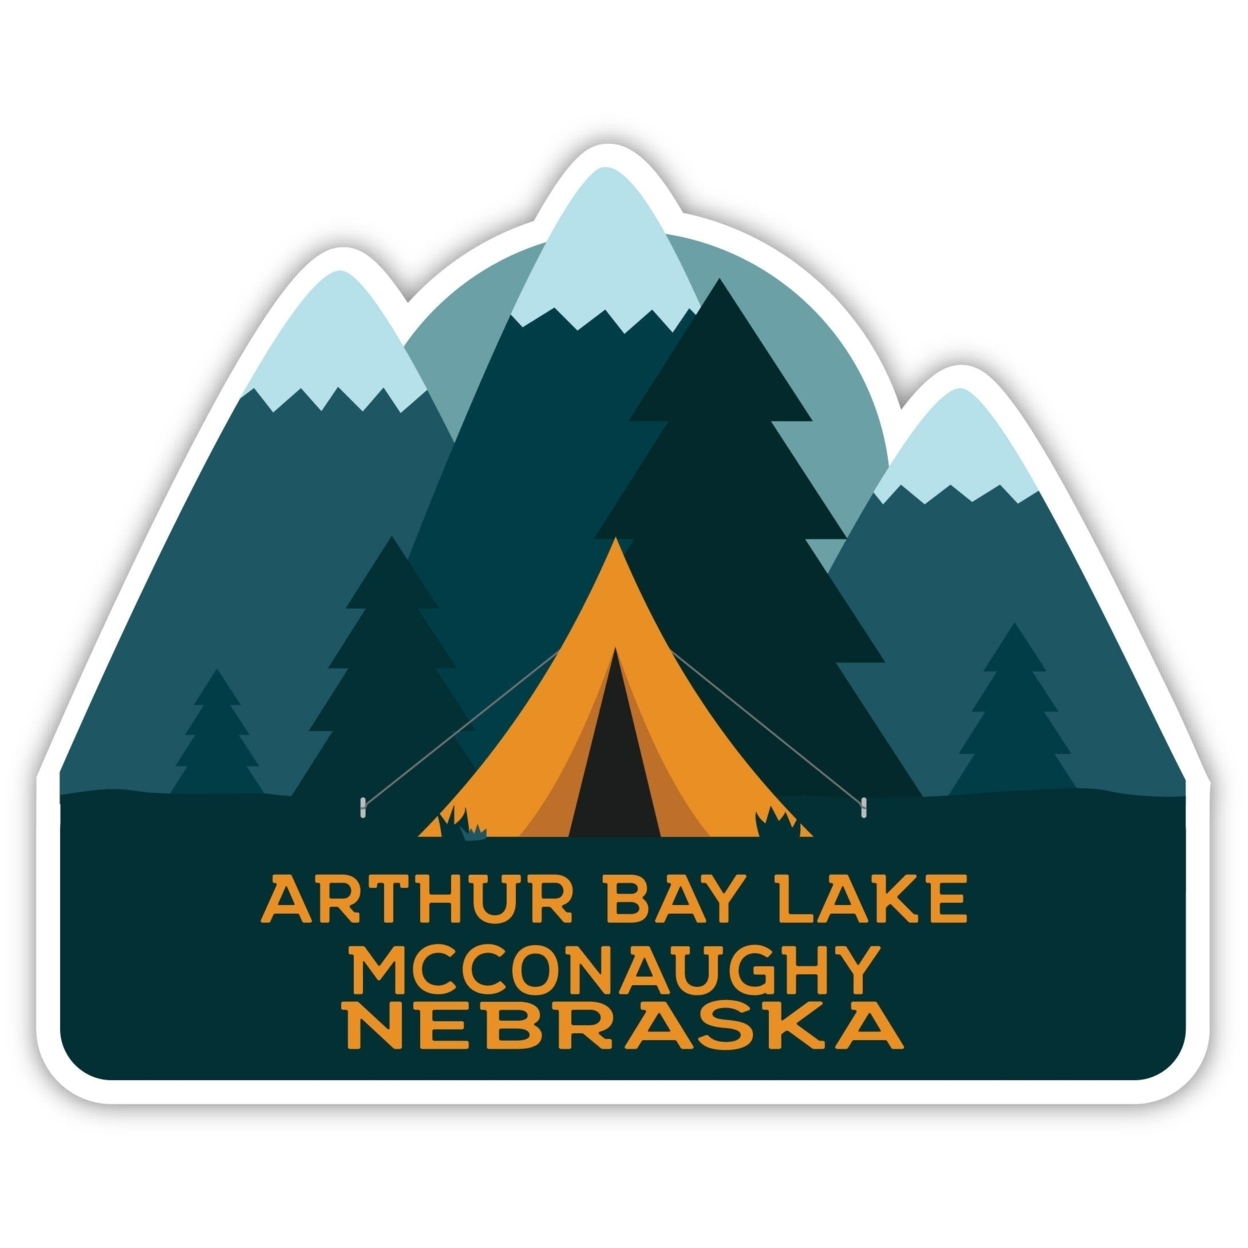 Arthur Bay Lake Mcconaughy Nebraska Souvenir Decorative Stickers (Choose Theme And Size) - 4-Pack, 10-Inch, Tent